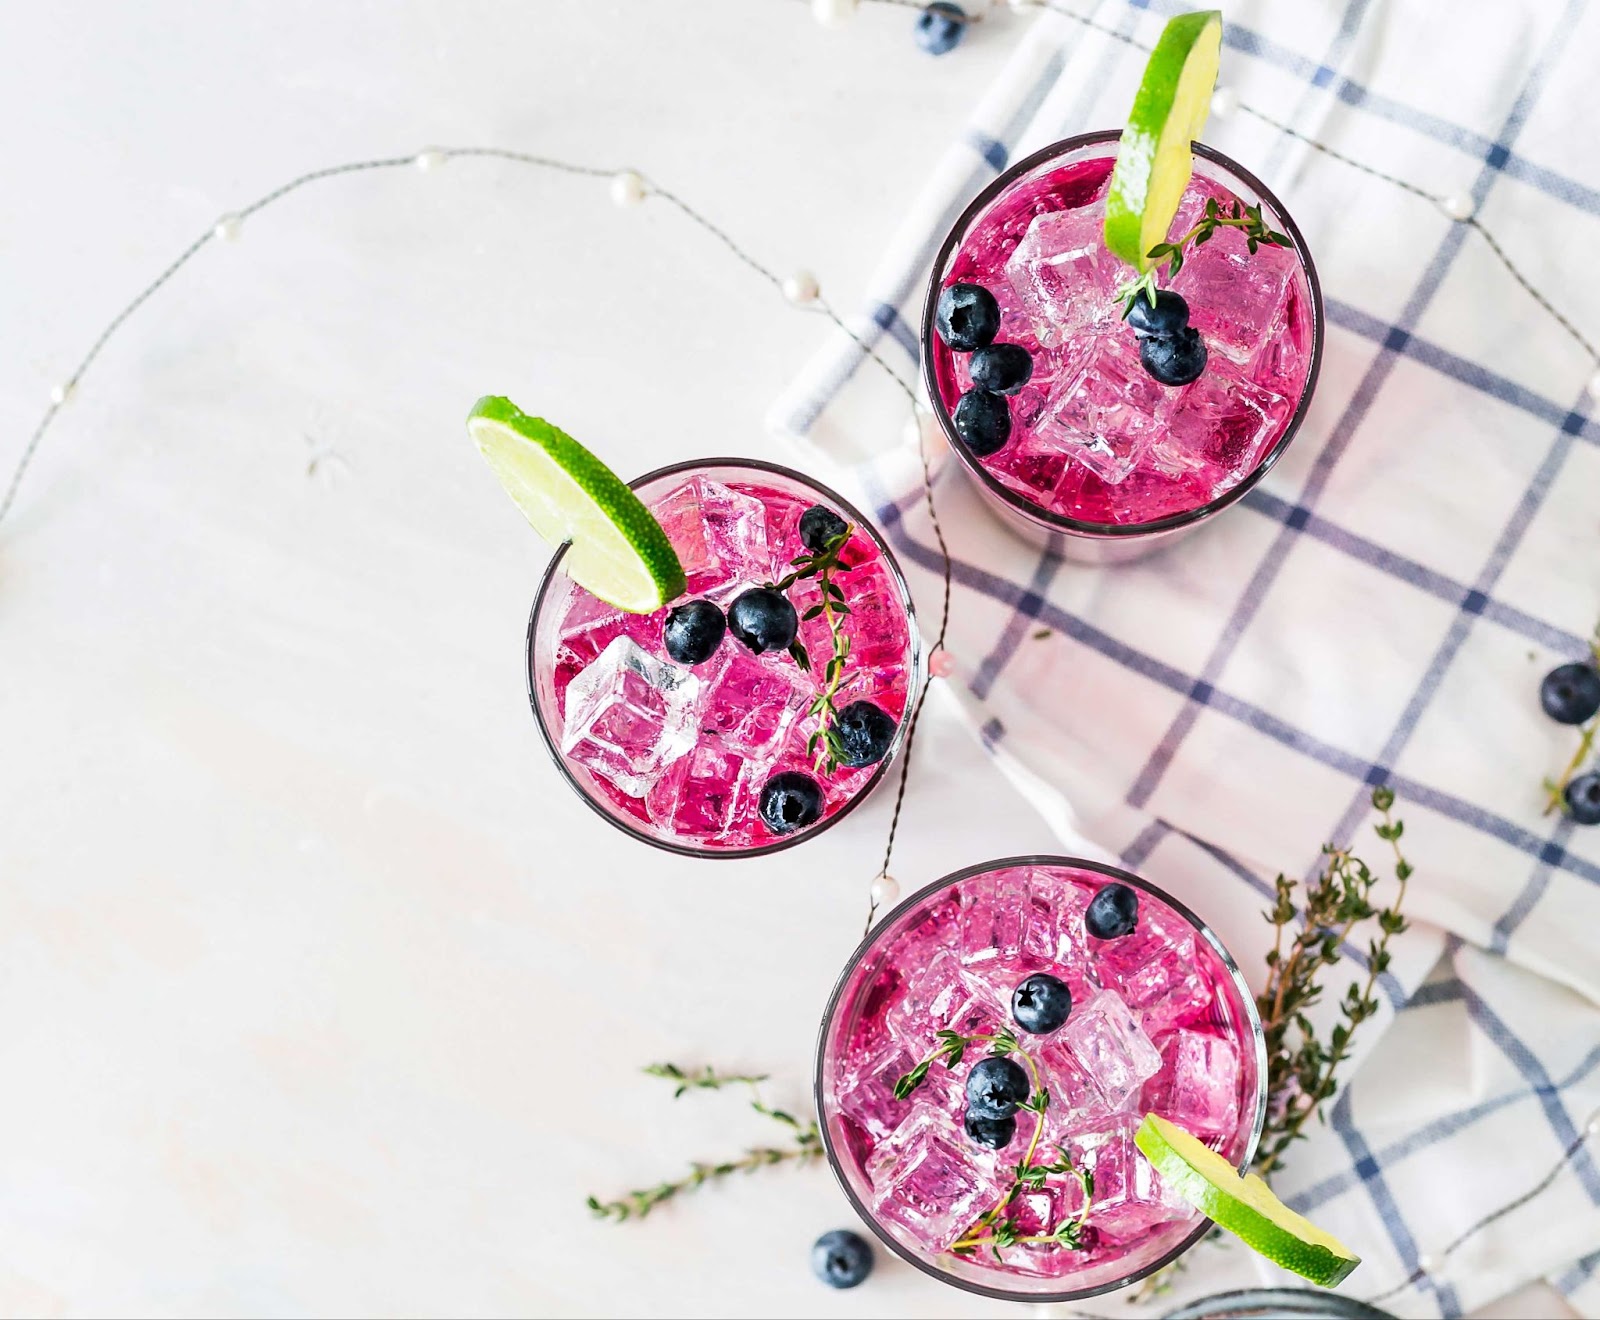 Tiga gelas minuman merah muda dengan blueberry dan jeruk nipis. Segar dan lezat! ???????????? #minuman #blueberry #jeruknipis